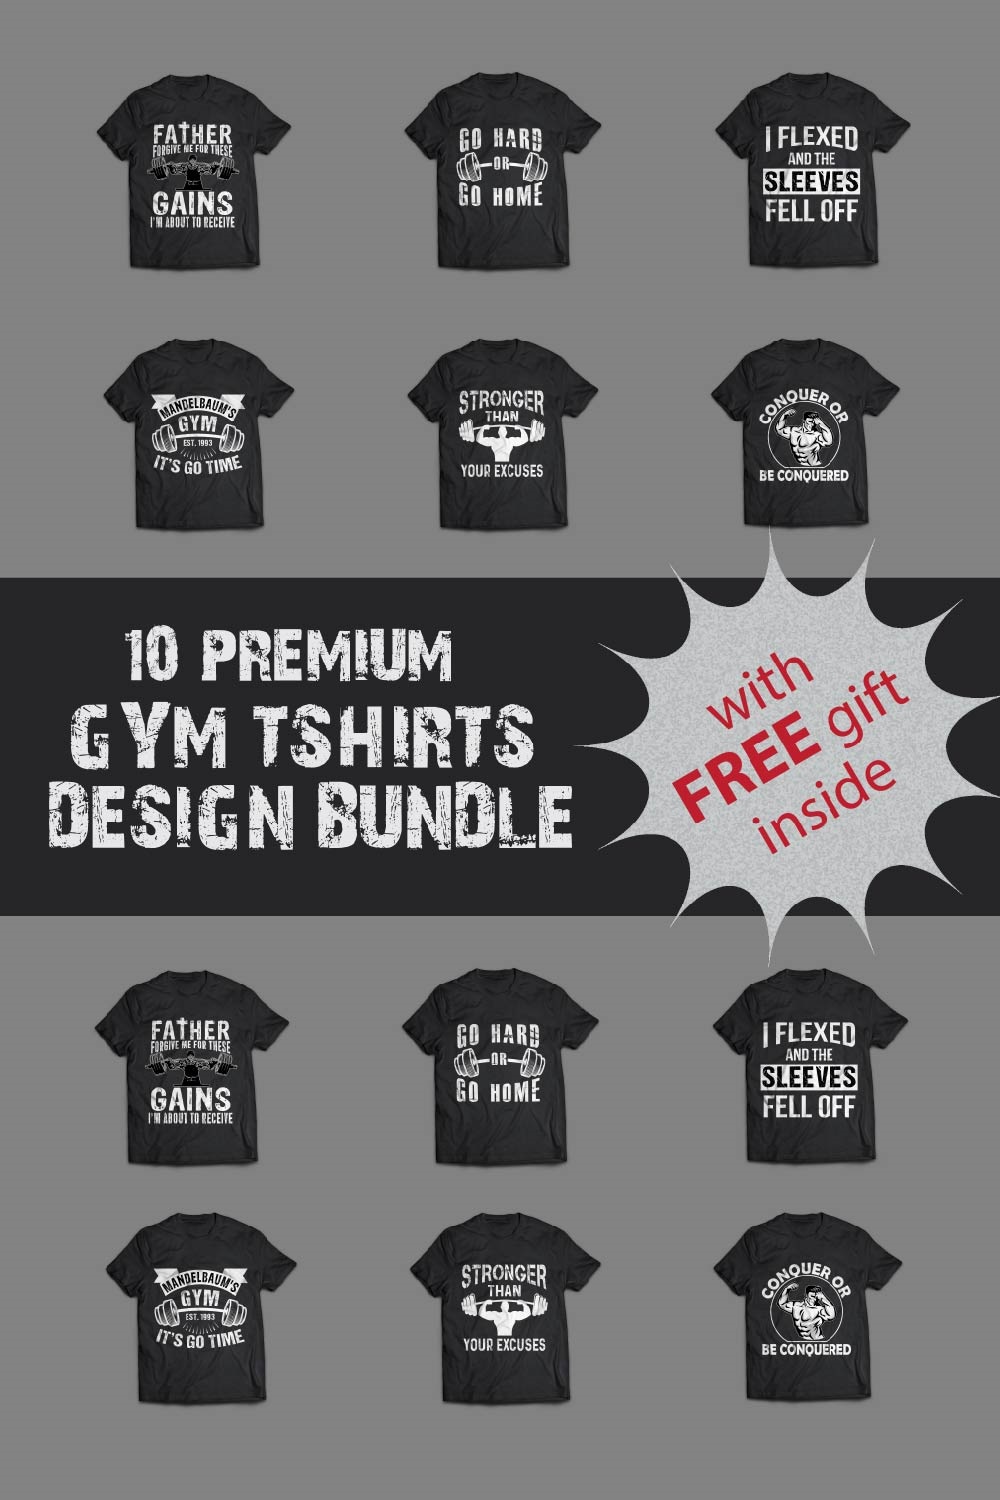 Gym tshirt designs bundle pinterest preview image.